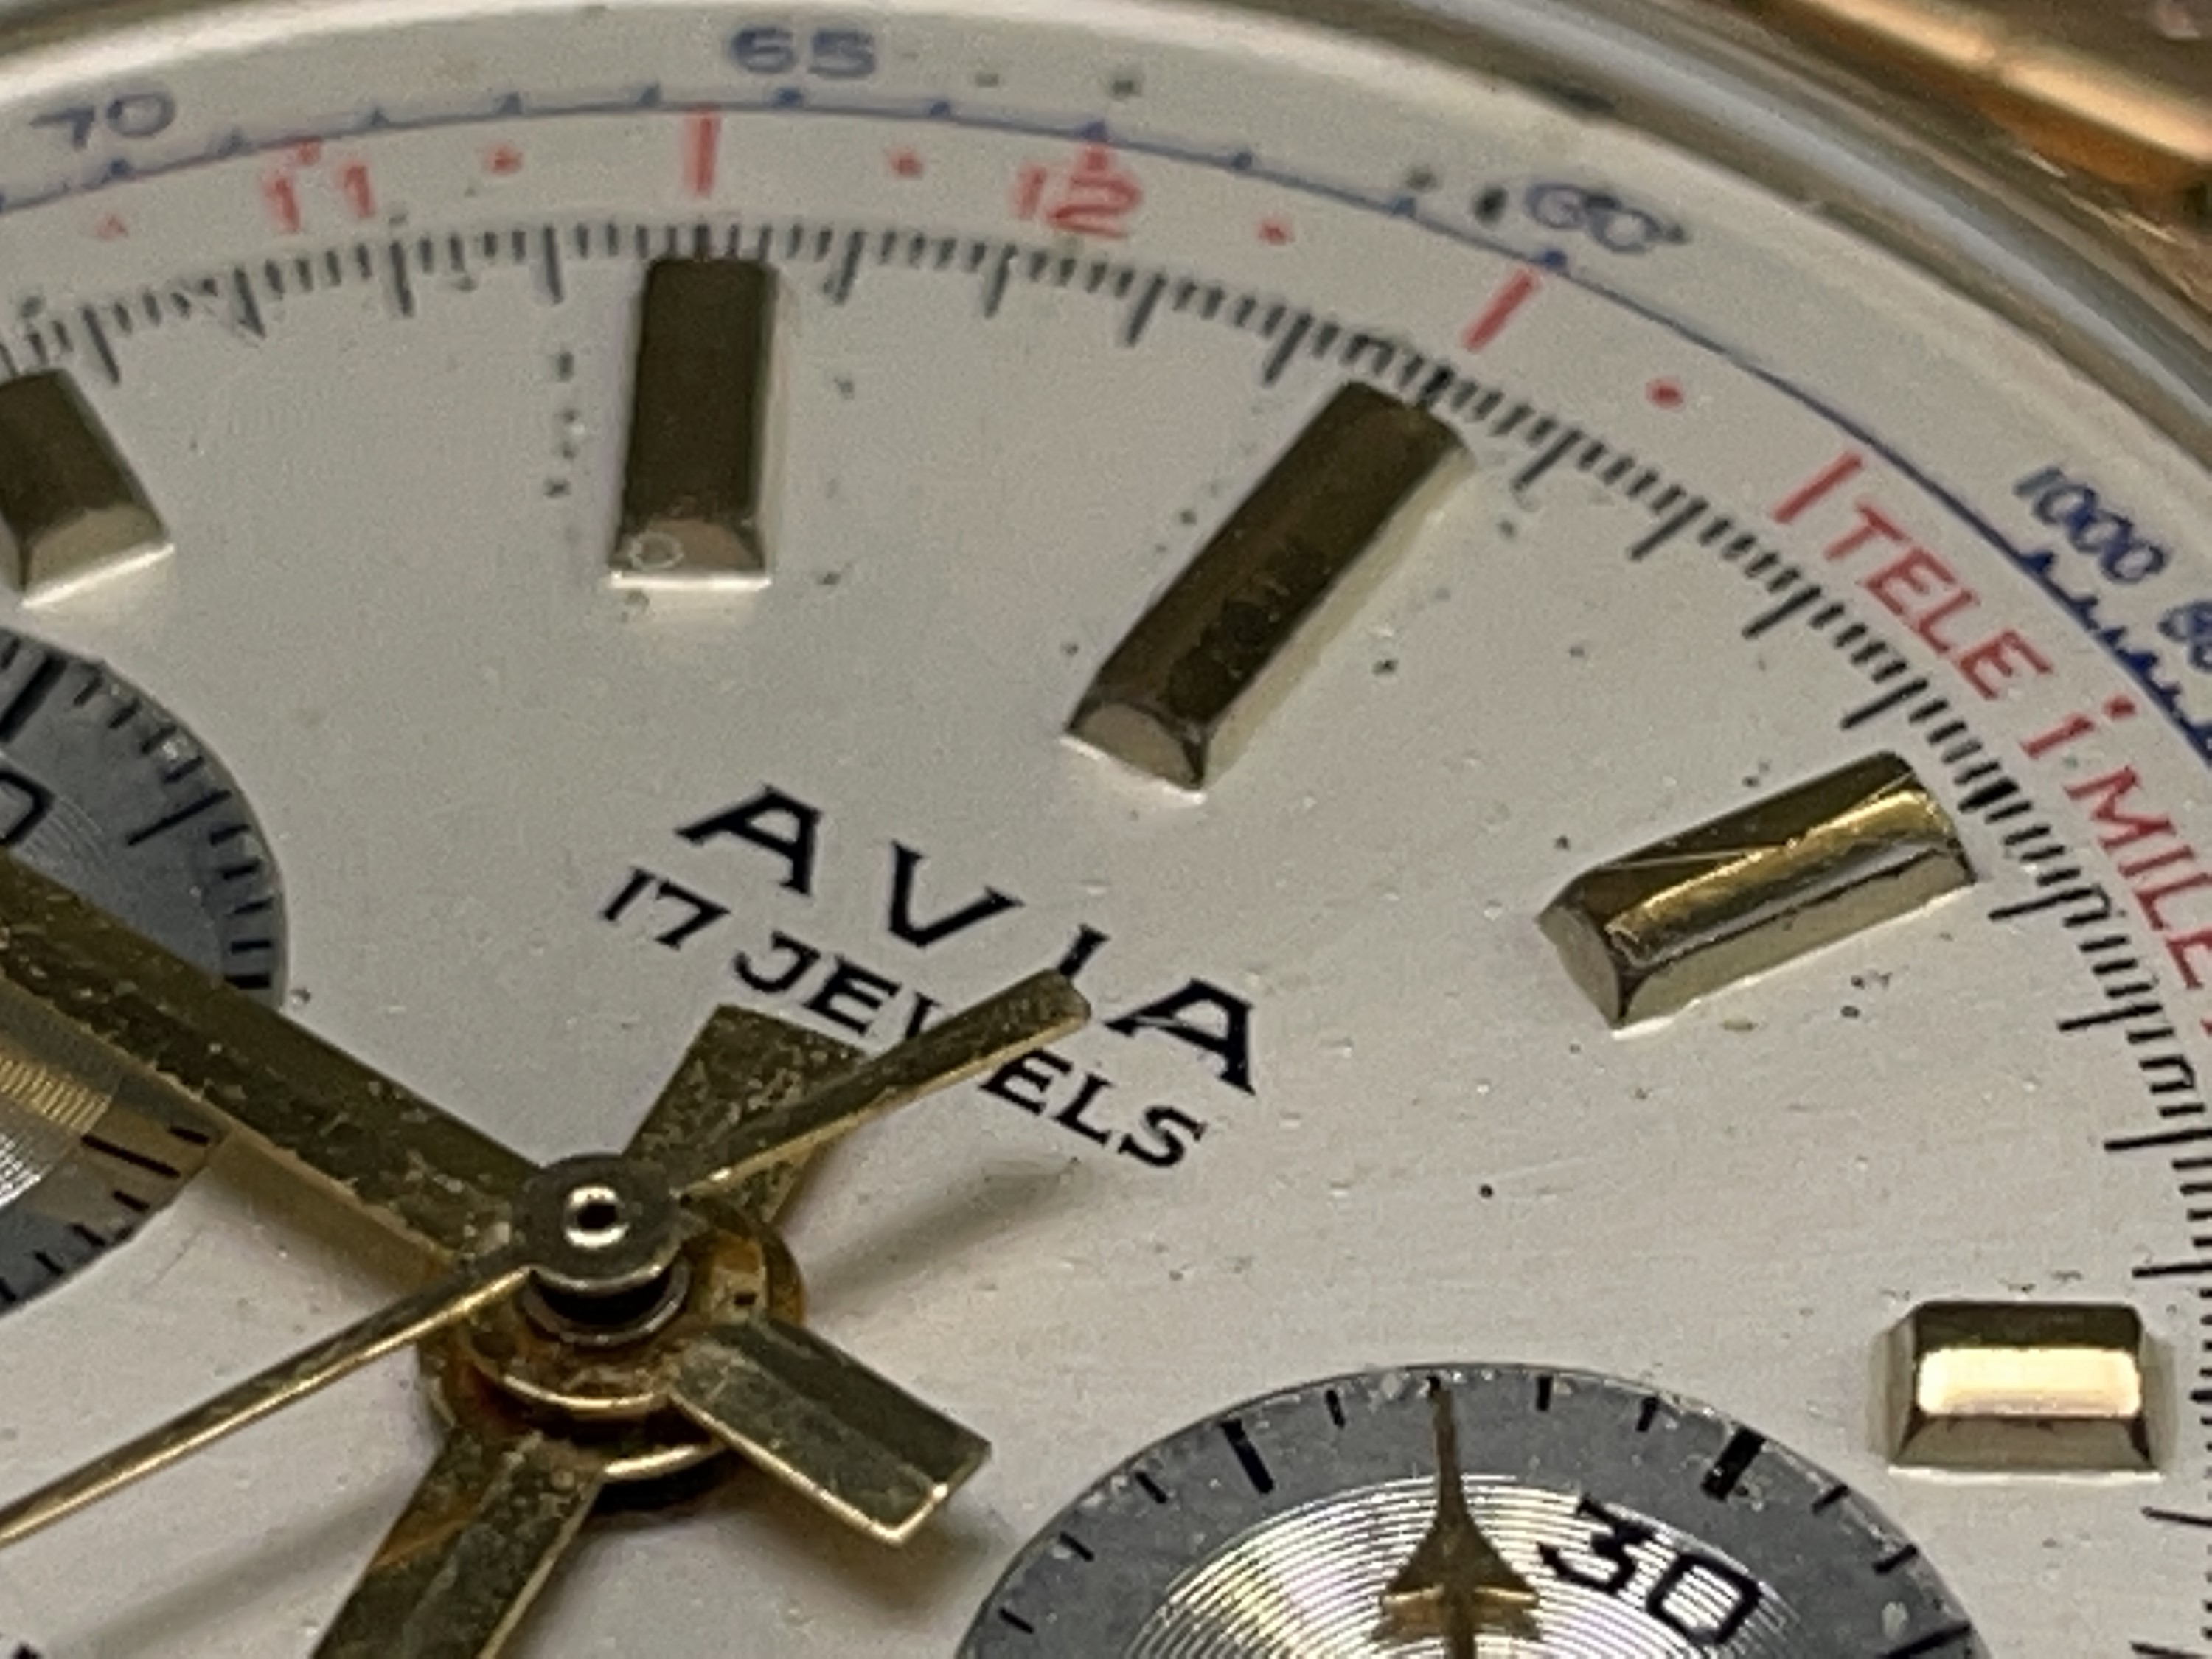 An Avia 9ct gold cased chronograph wristwatch 36mm diameter 52.8gm including gilt bracelet. - Image 6 of 9